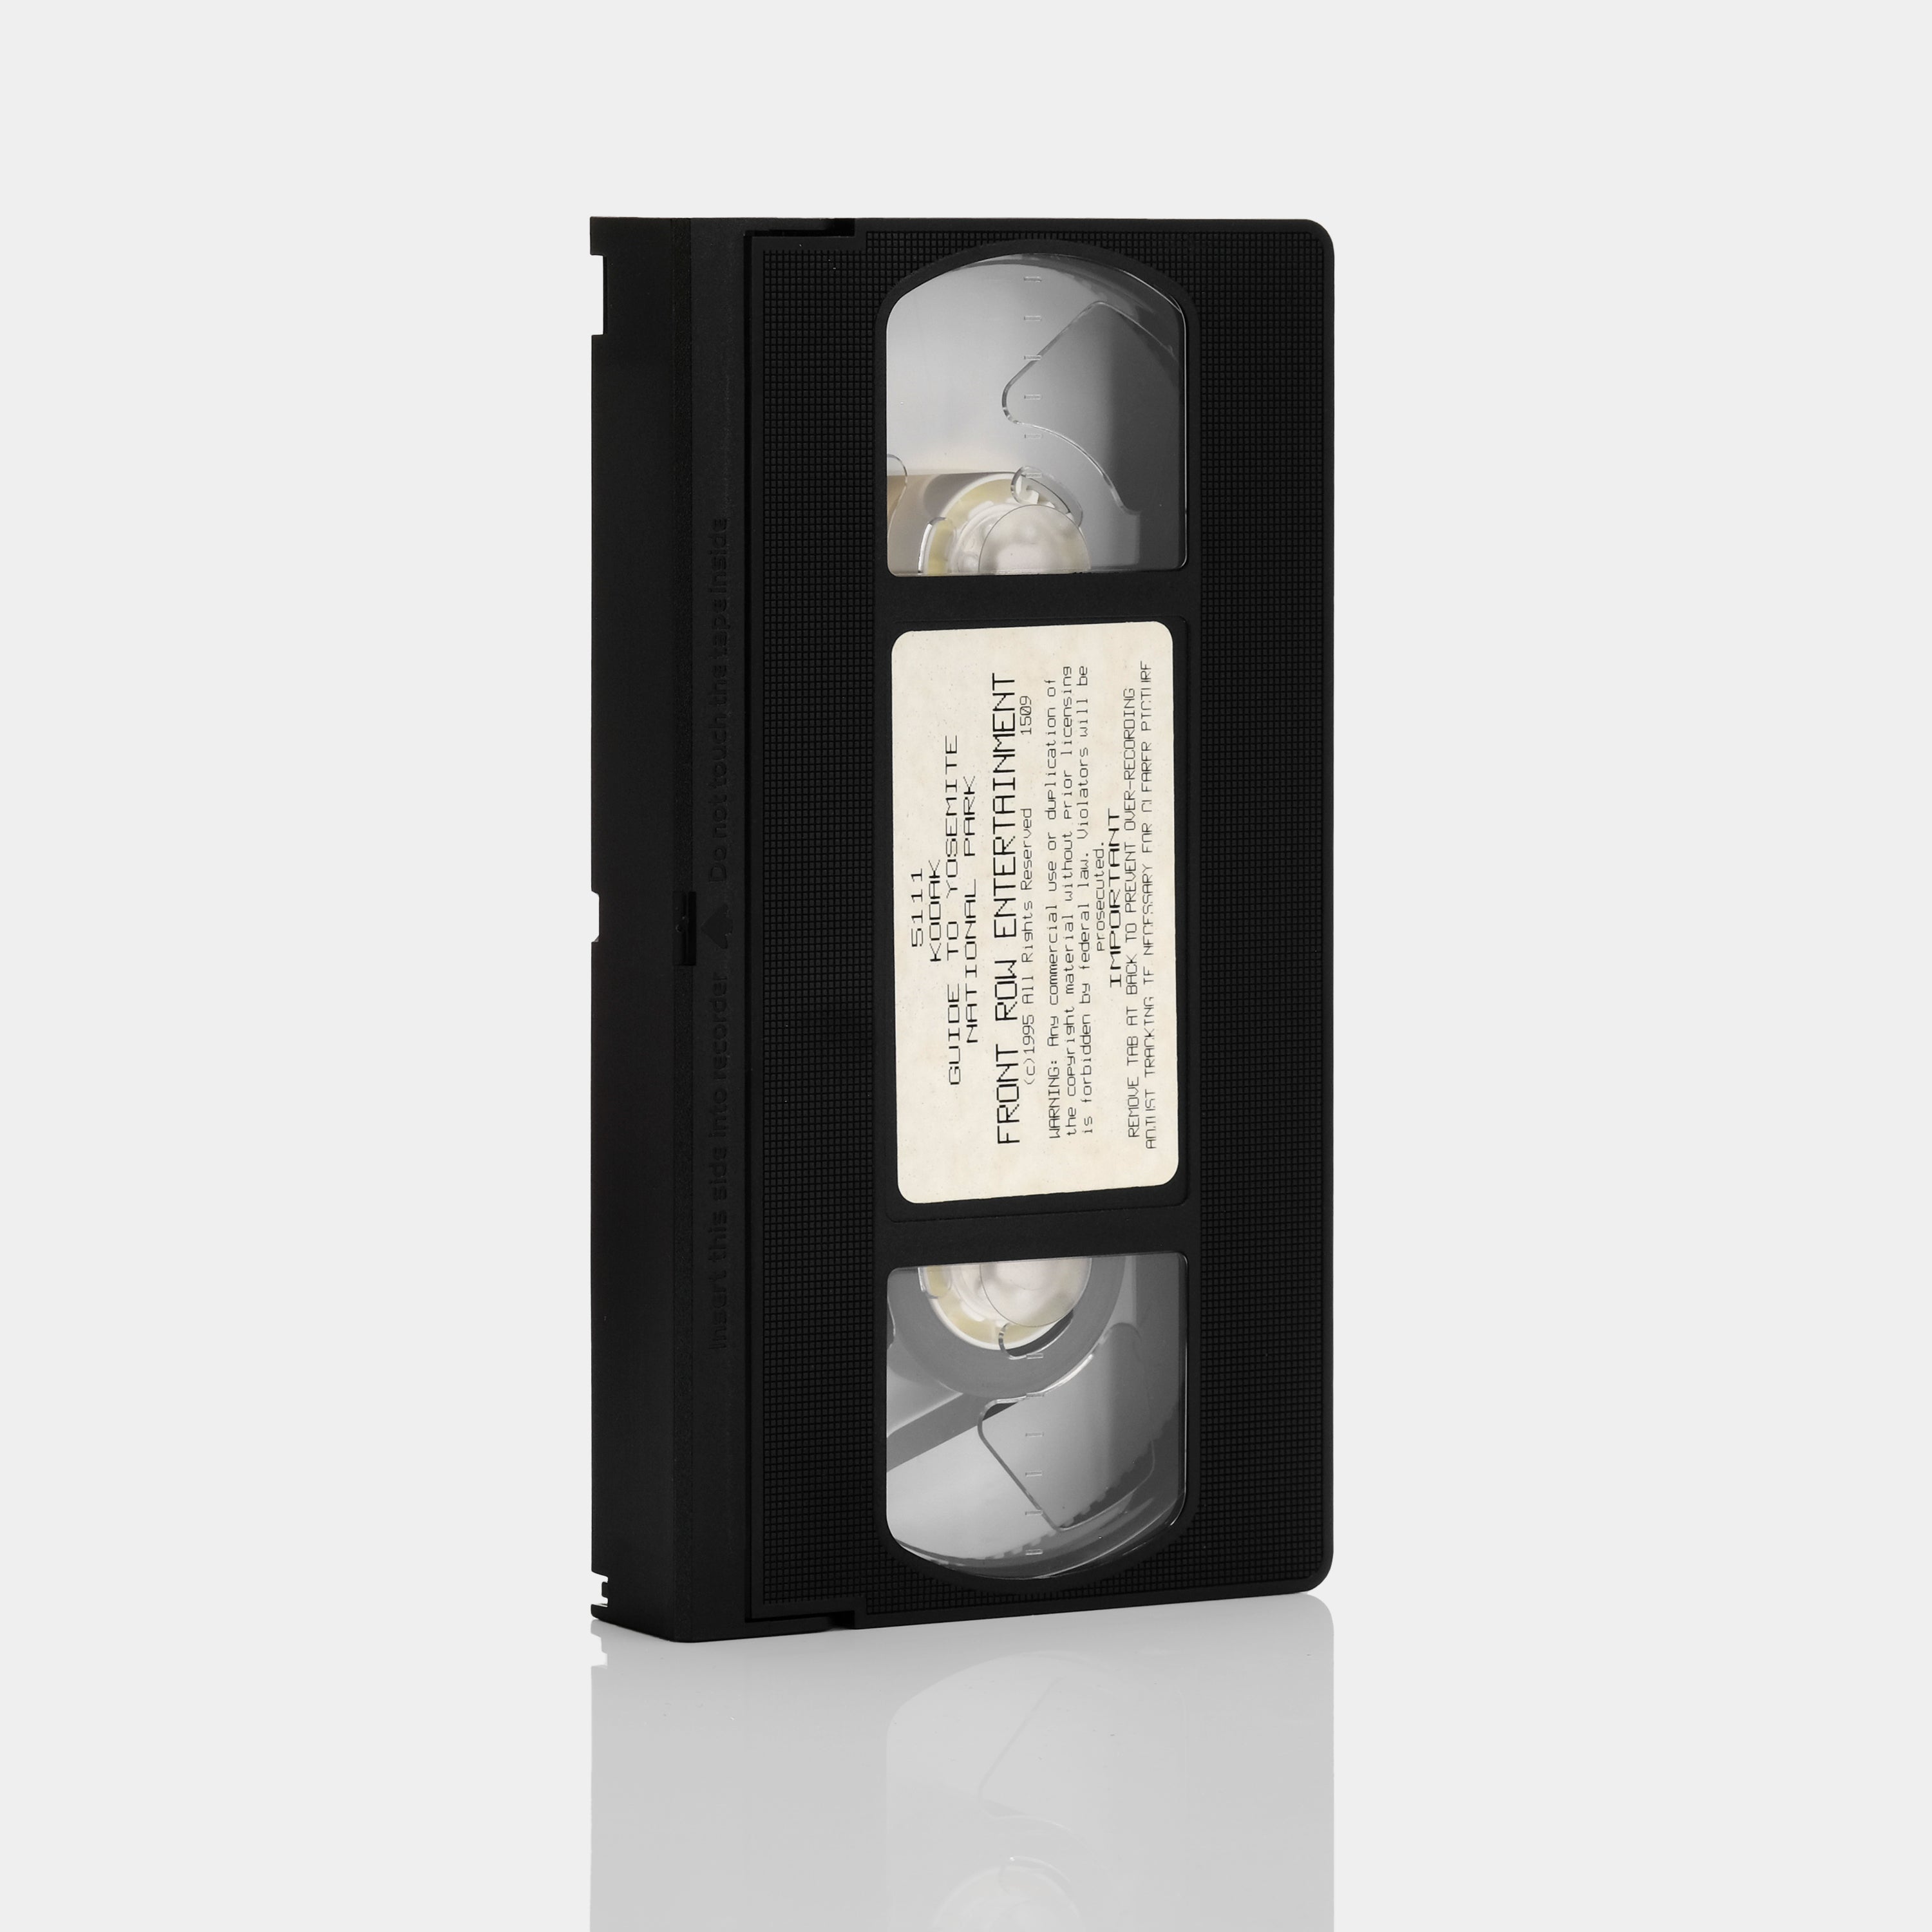 Kodak: Guide To Yosemite National Park VHS Tape